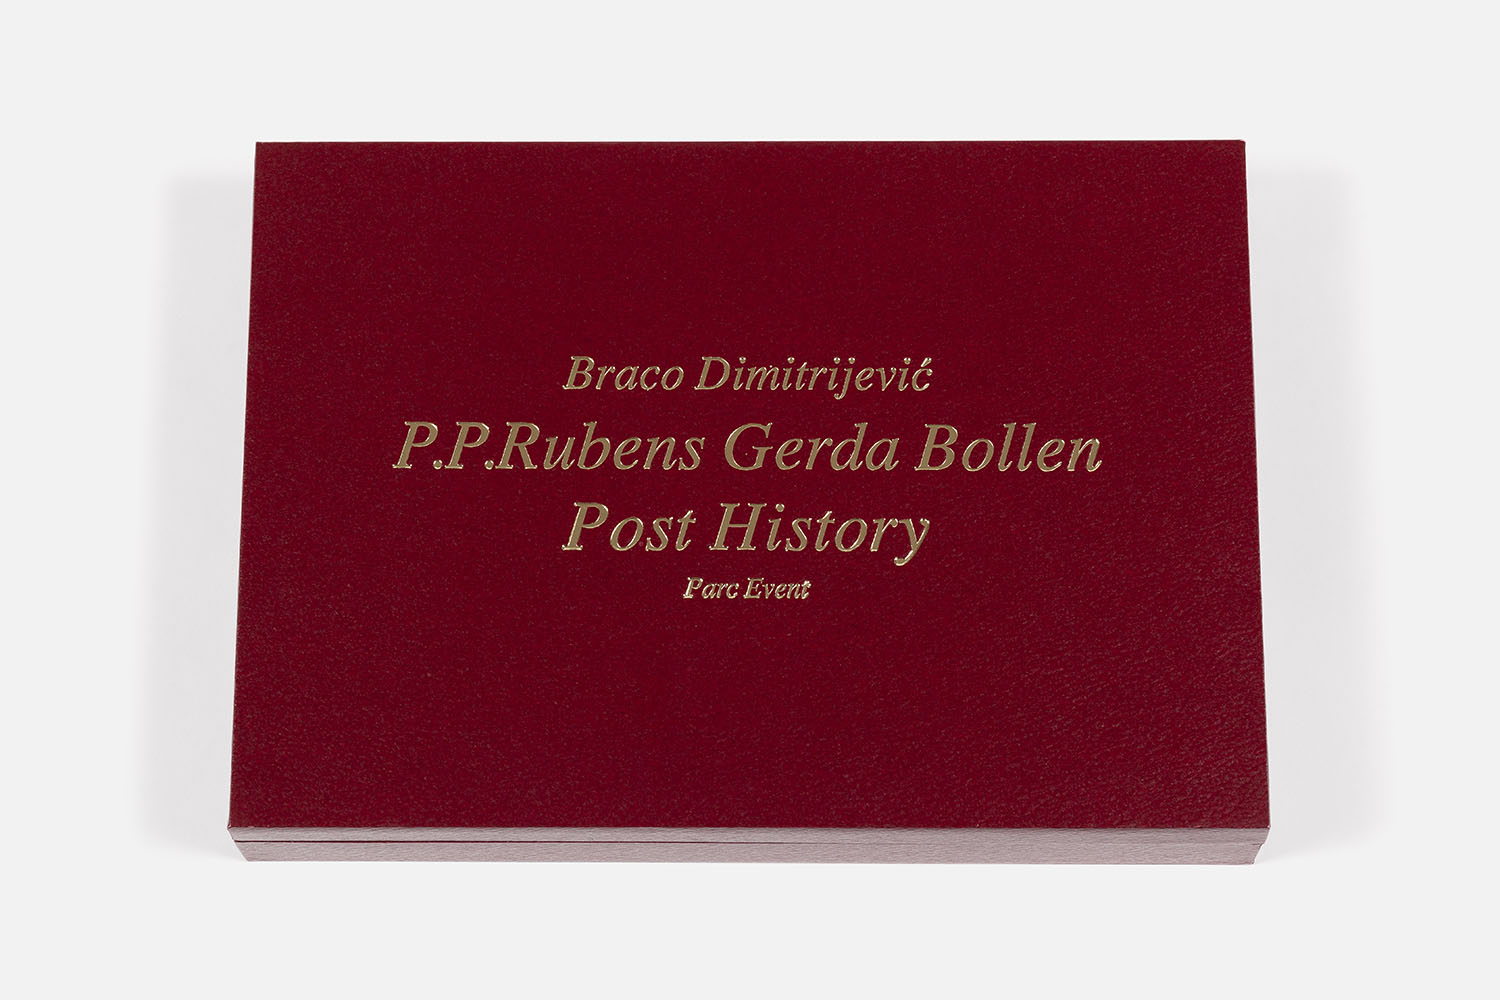 Braco Dimitrijevic - Parc Event / P.P. Rubens - Gerda Bollen, 1992 - 